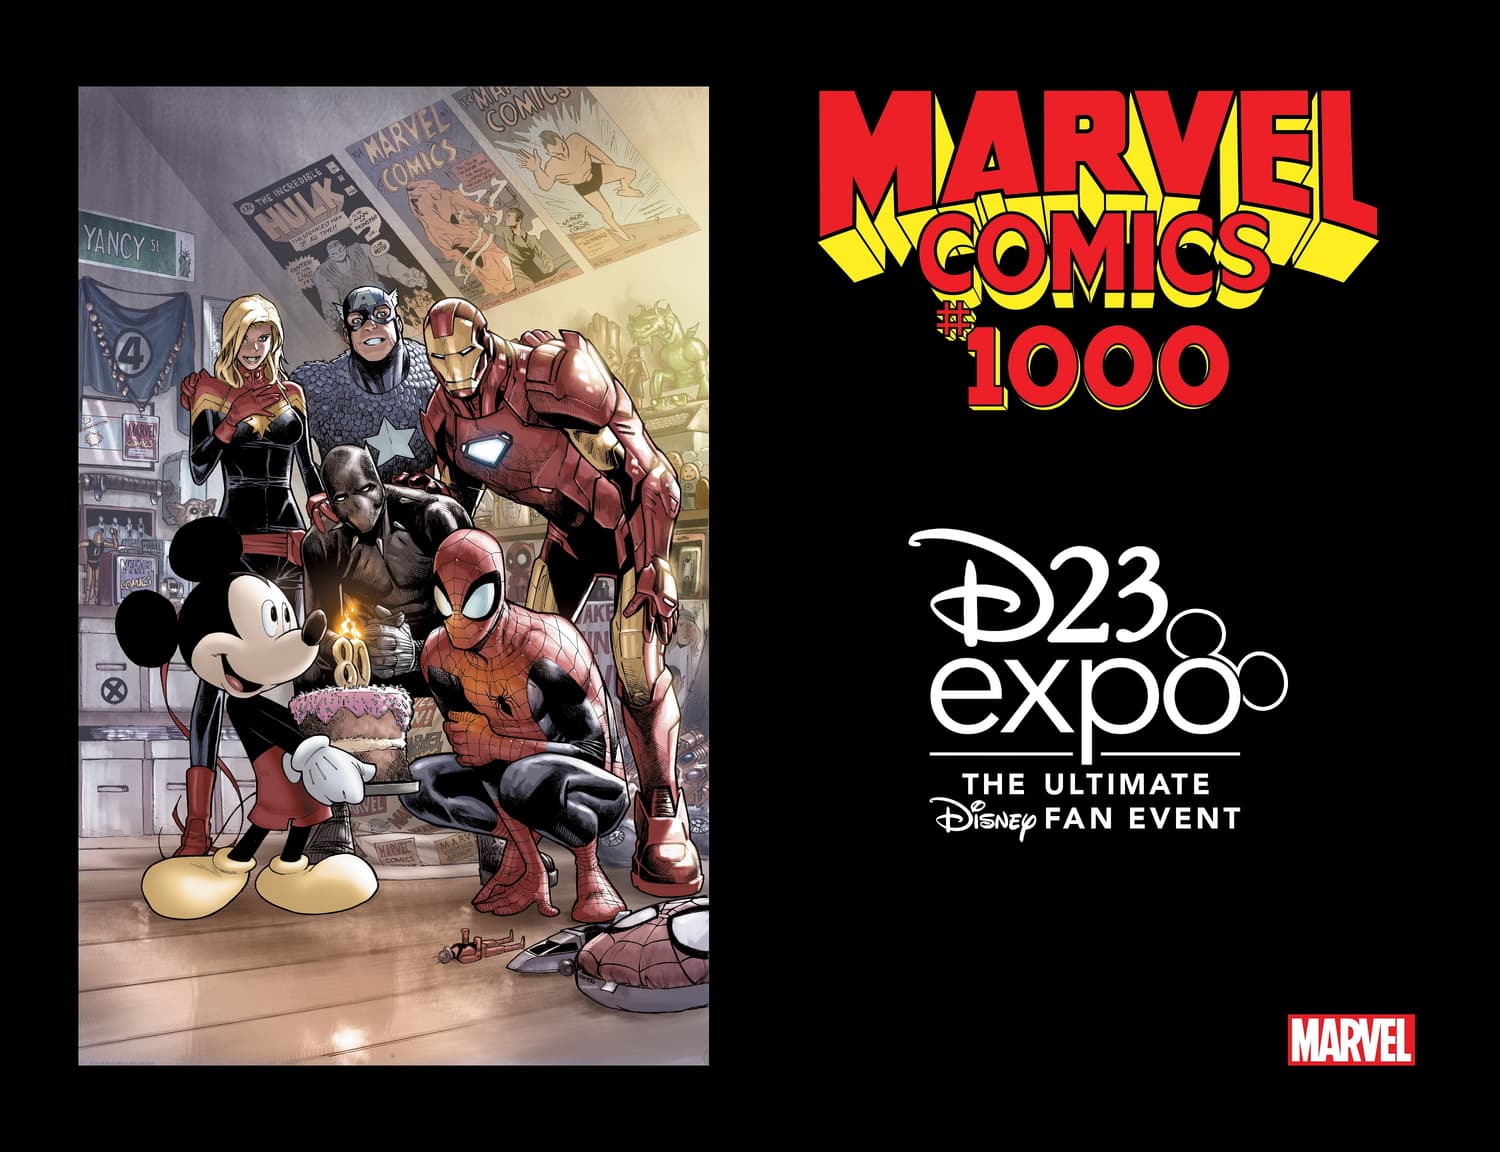 MARVEL COMICS #1000 D23 Expo variant cover